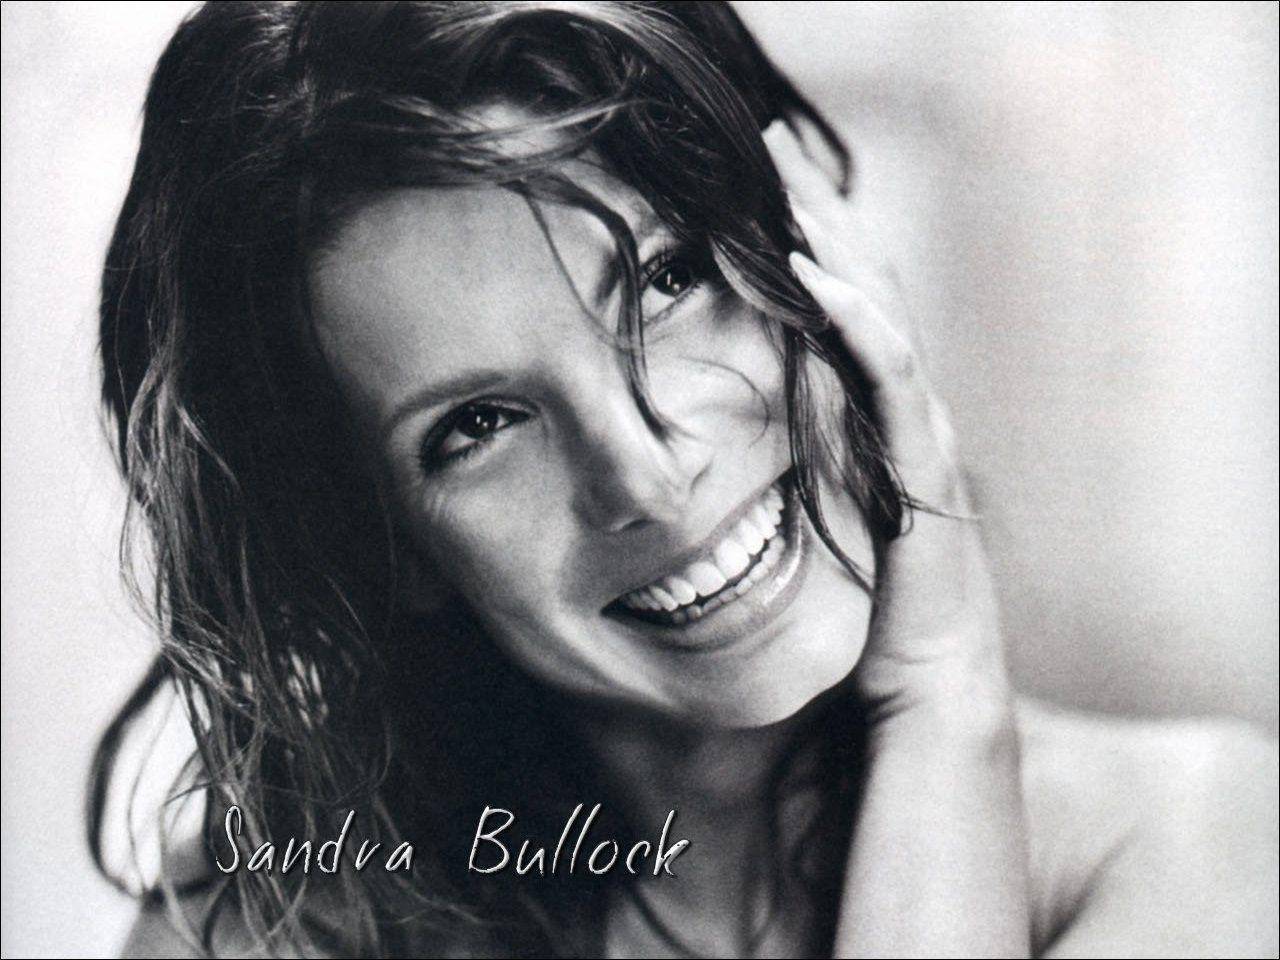 Sandra Bullock Image Wallpaper 02. hdwallpaper